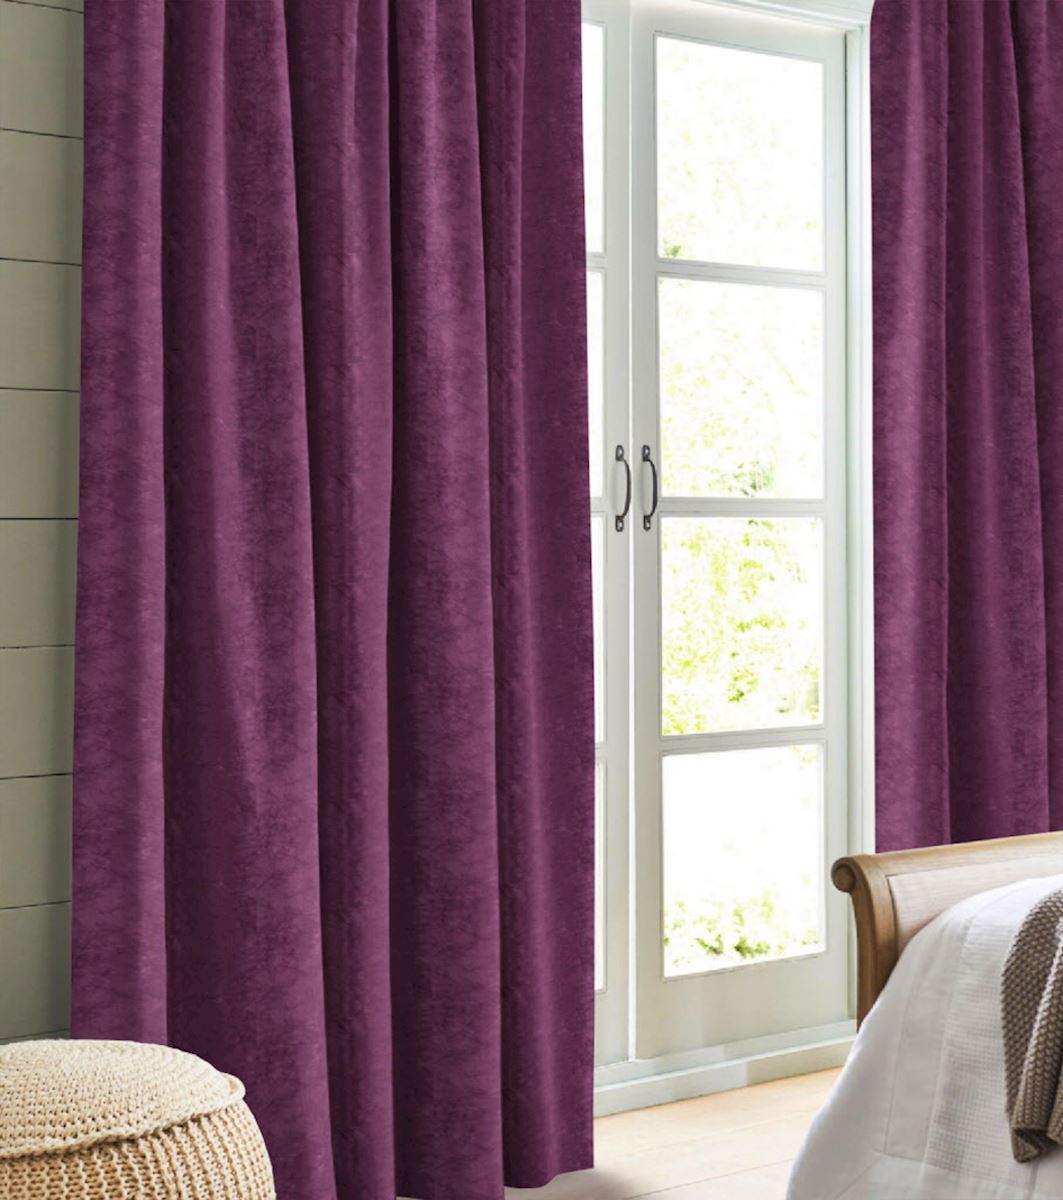 Night curtain dark purple Belle